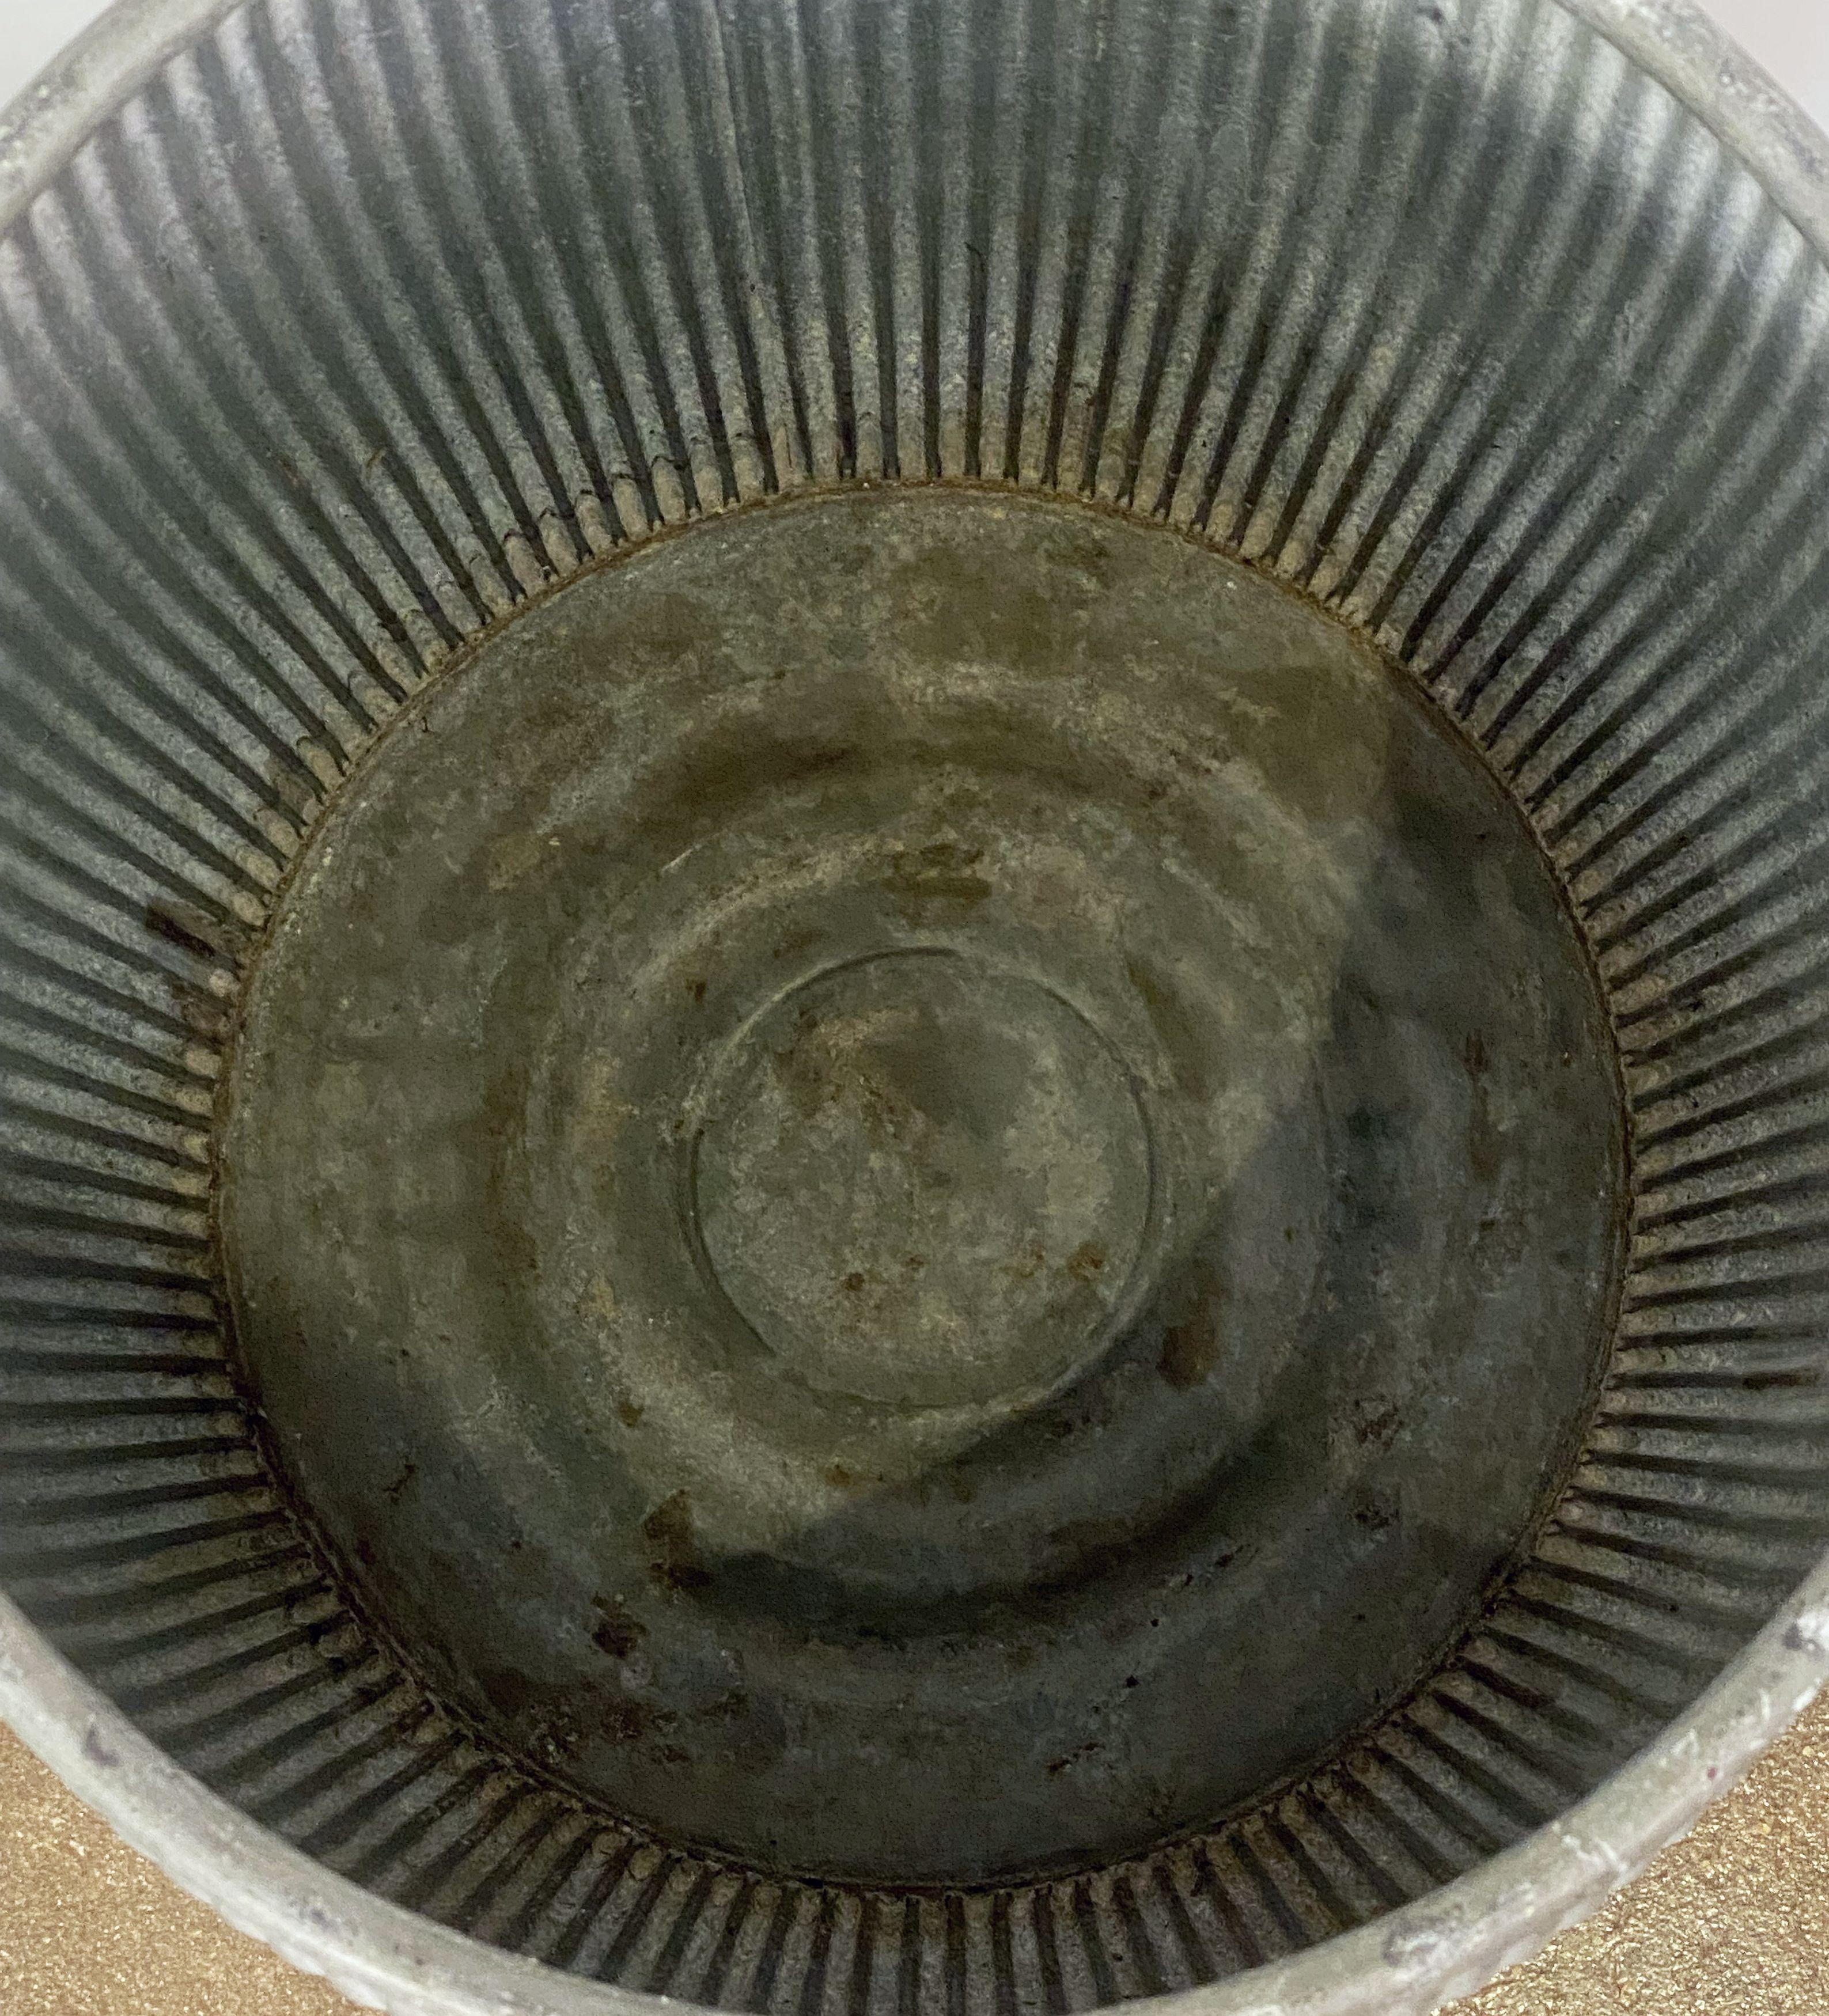 Metal Zinc Garden Pot or Dolly Tub Planter from England